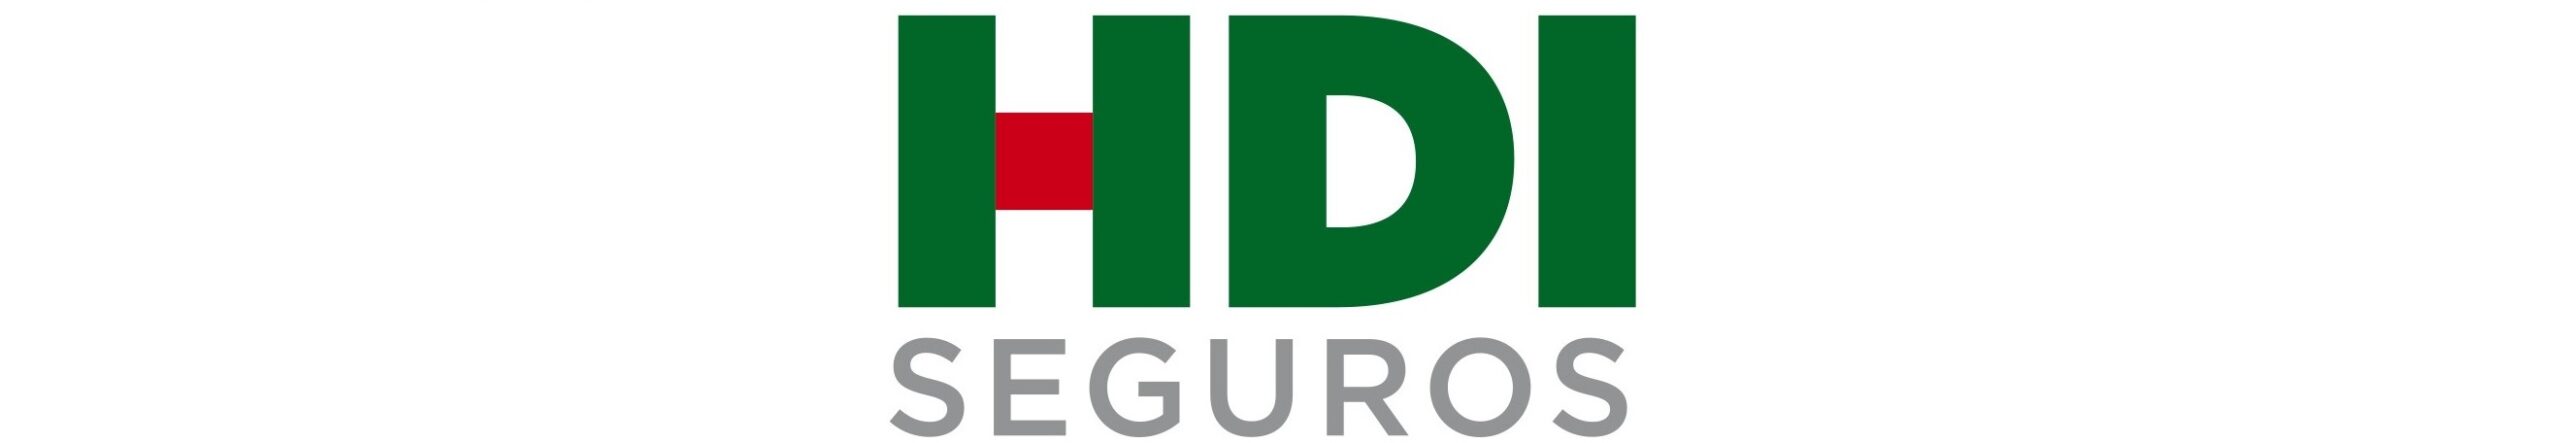 Logo-HDI-Seguros-2-scaled.jpg